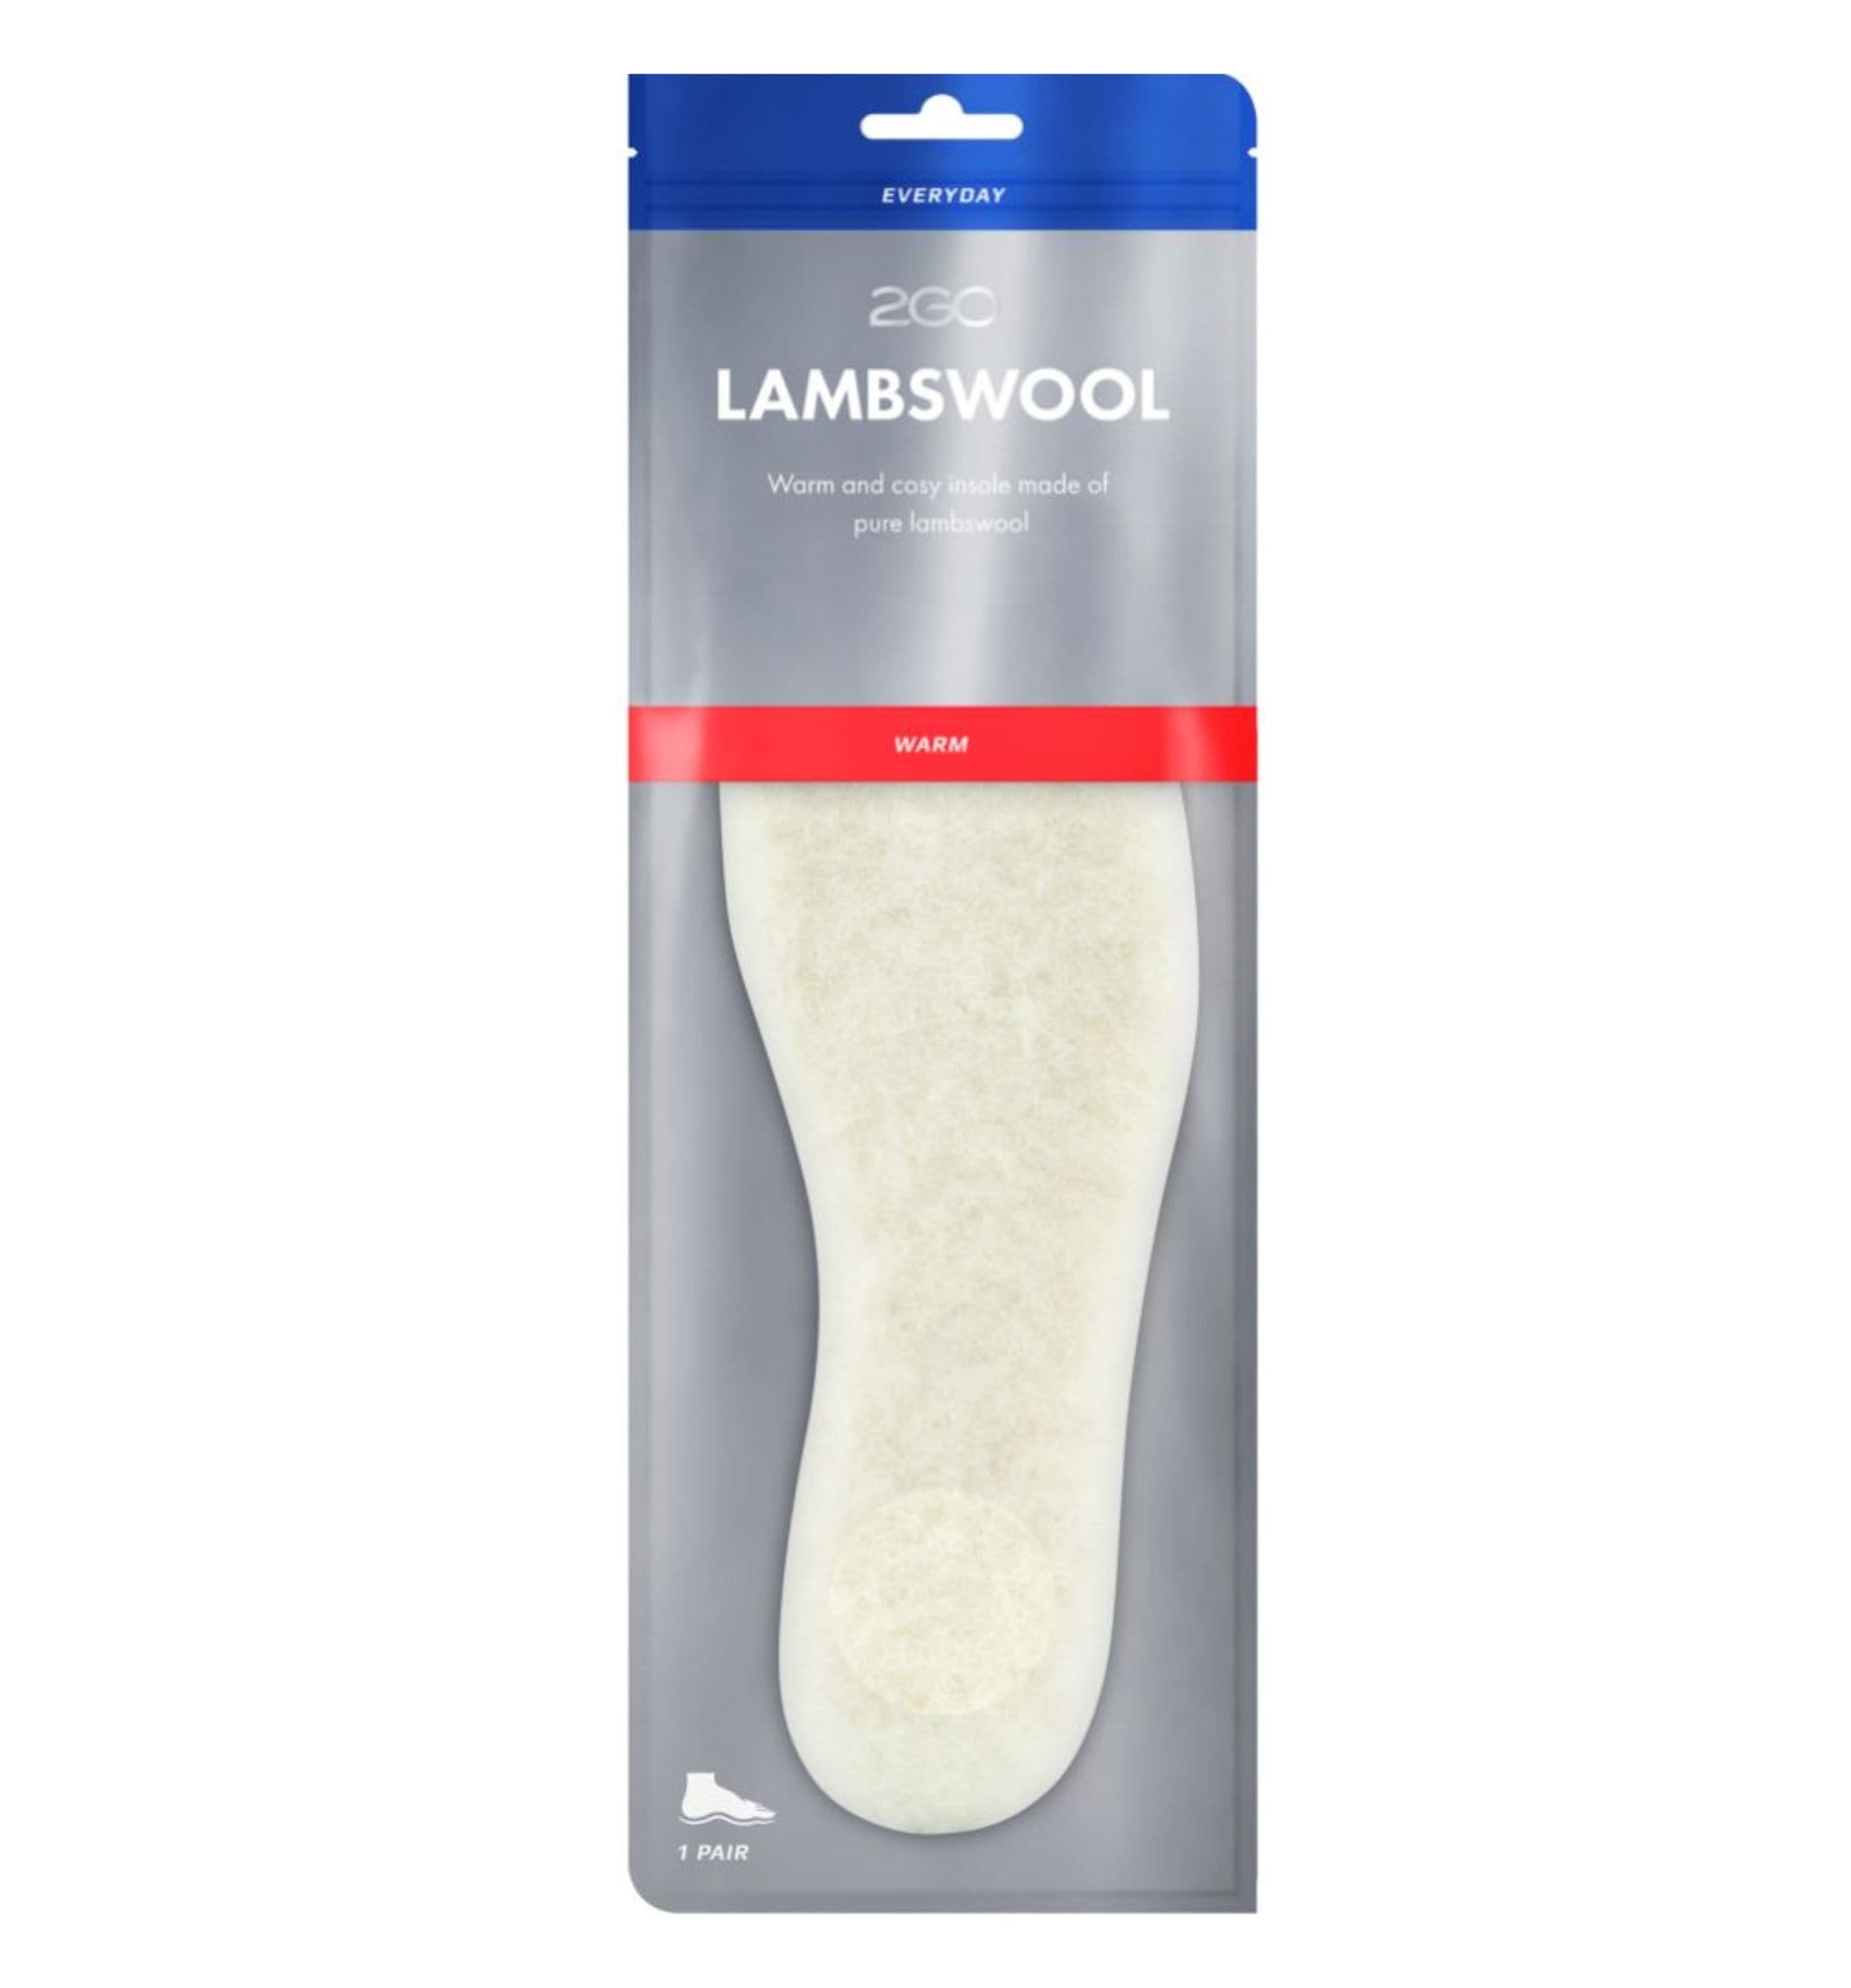 2GO Lambswool/Felt sole